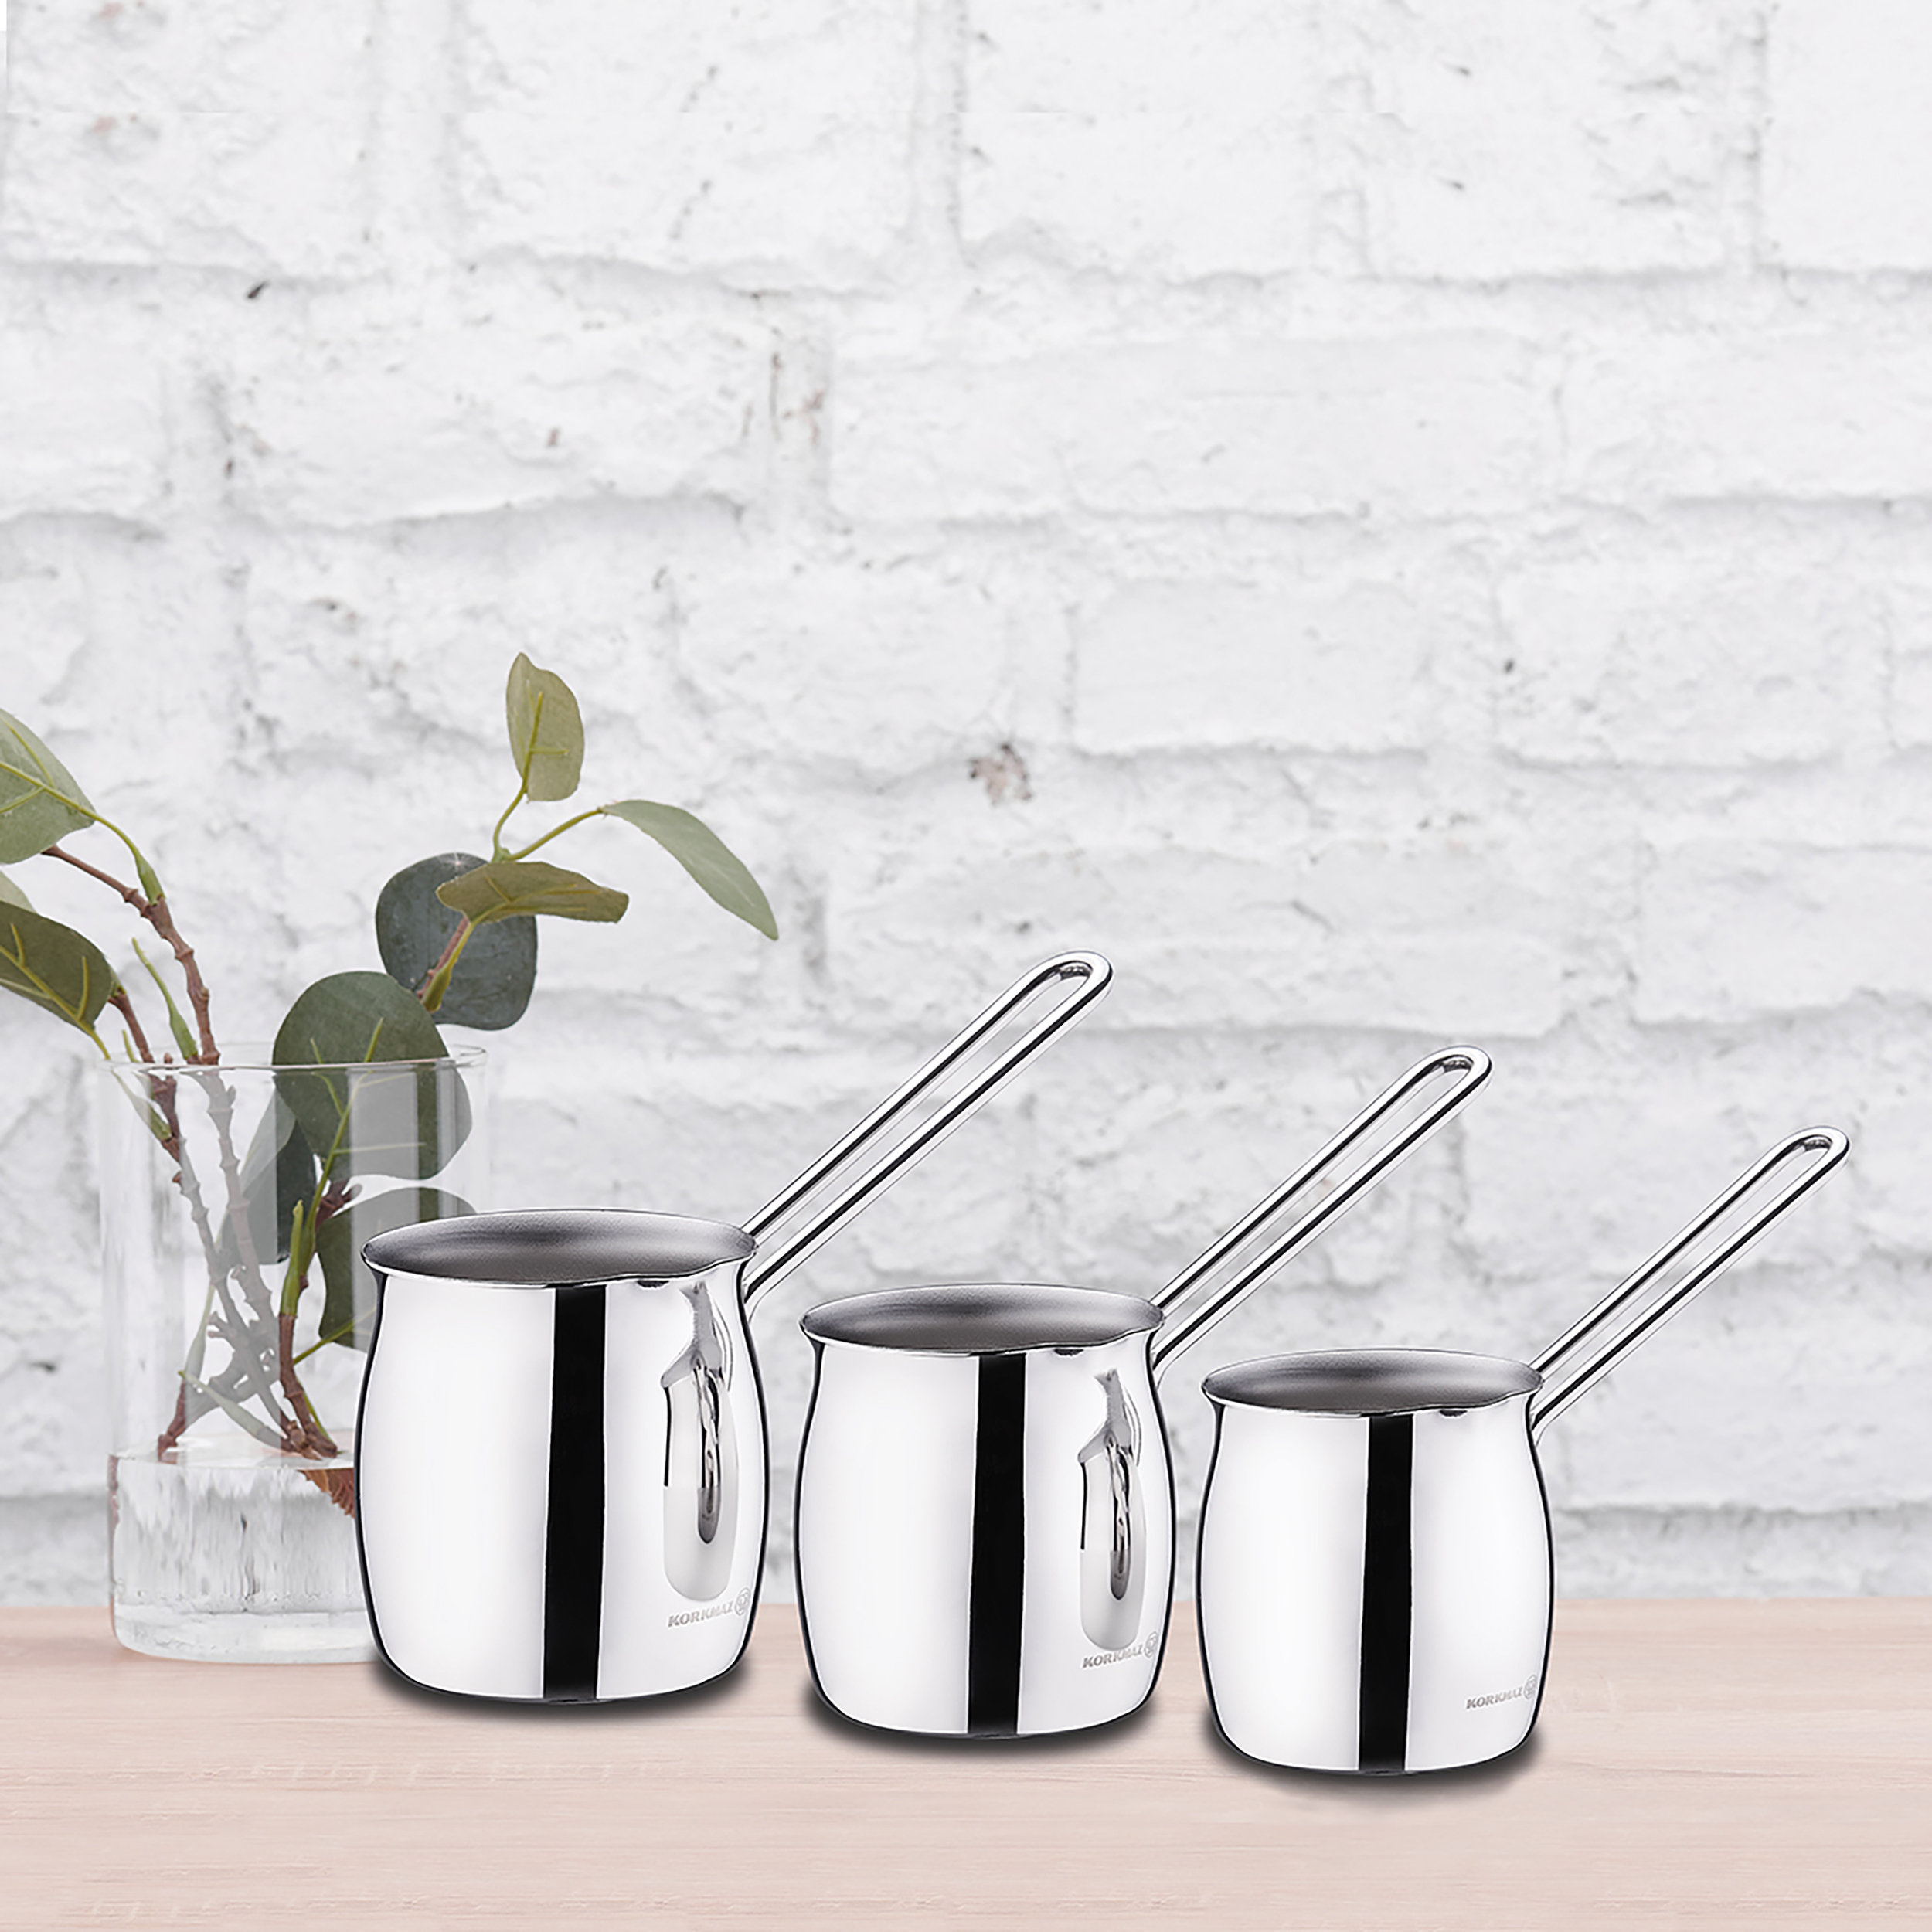 Korkmaz Tombik Stainless Steel Cookware Set, Cooking Pots with